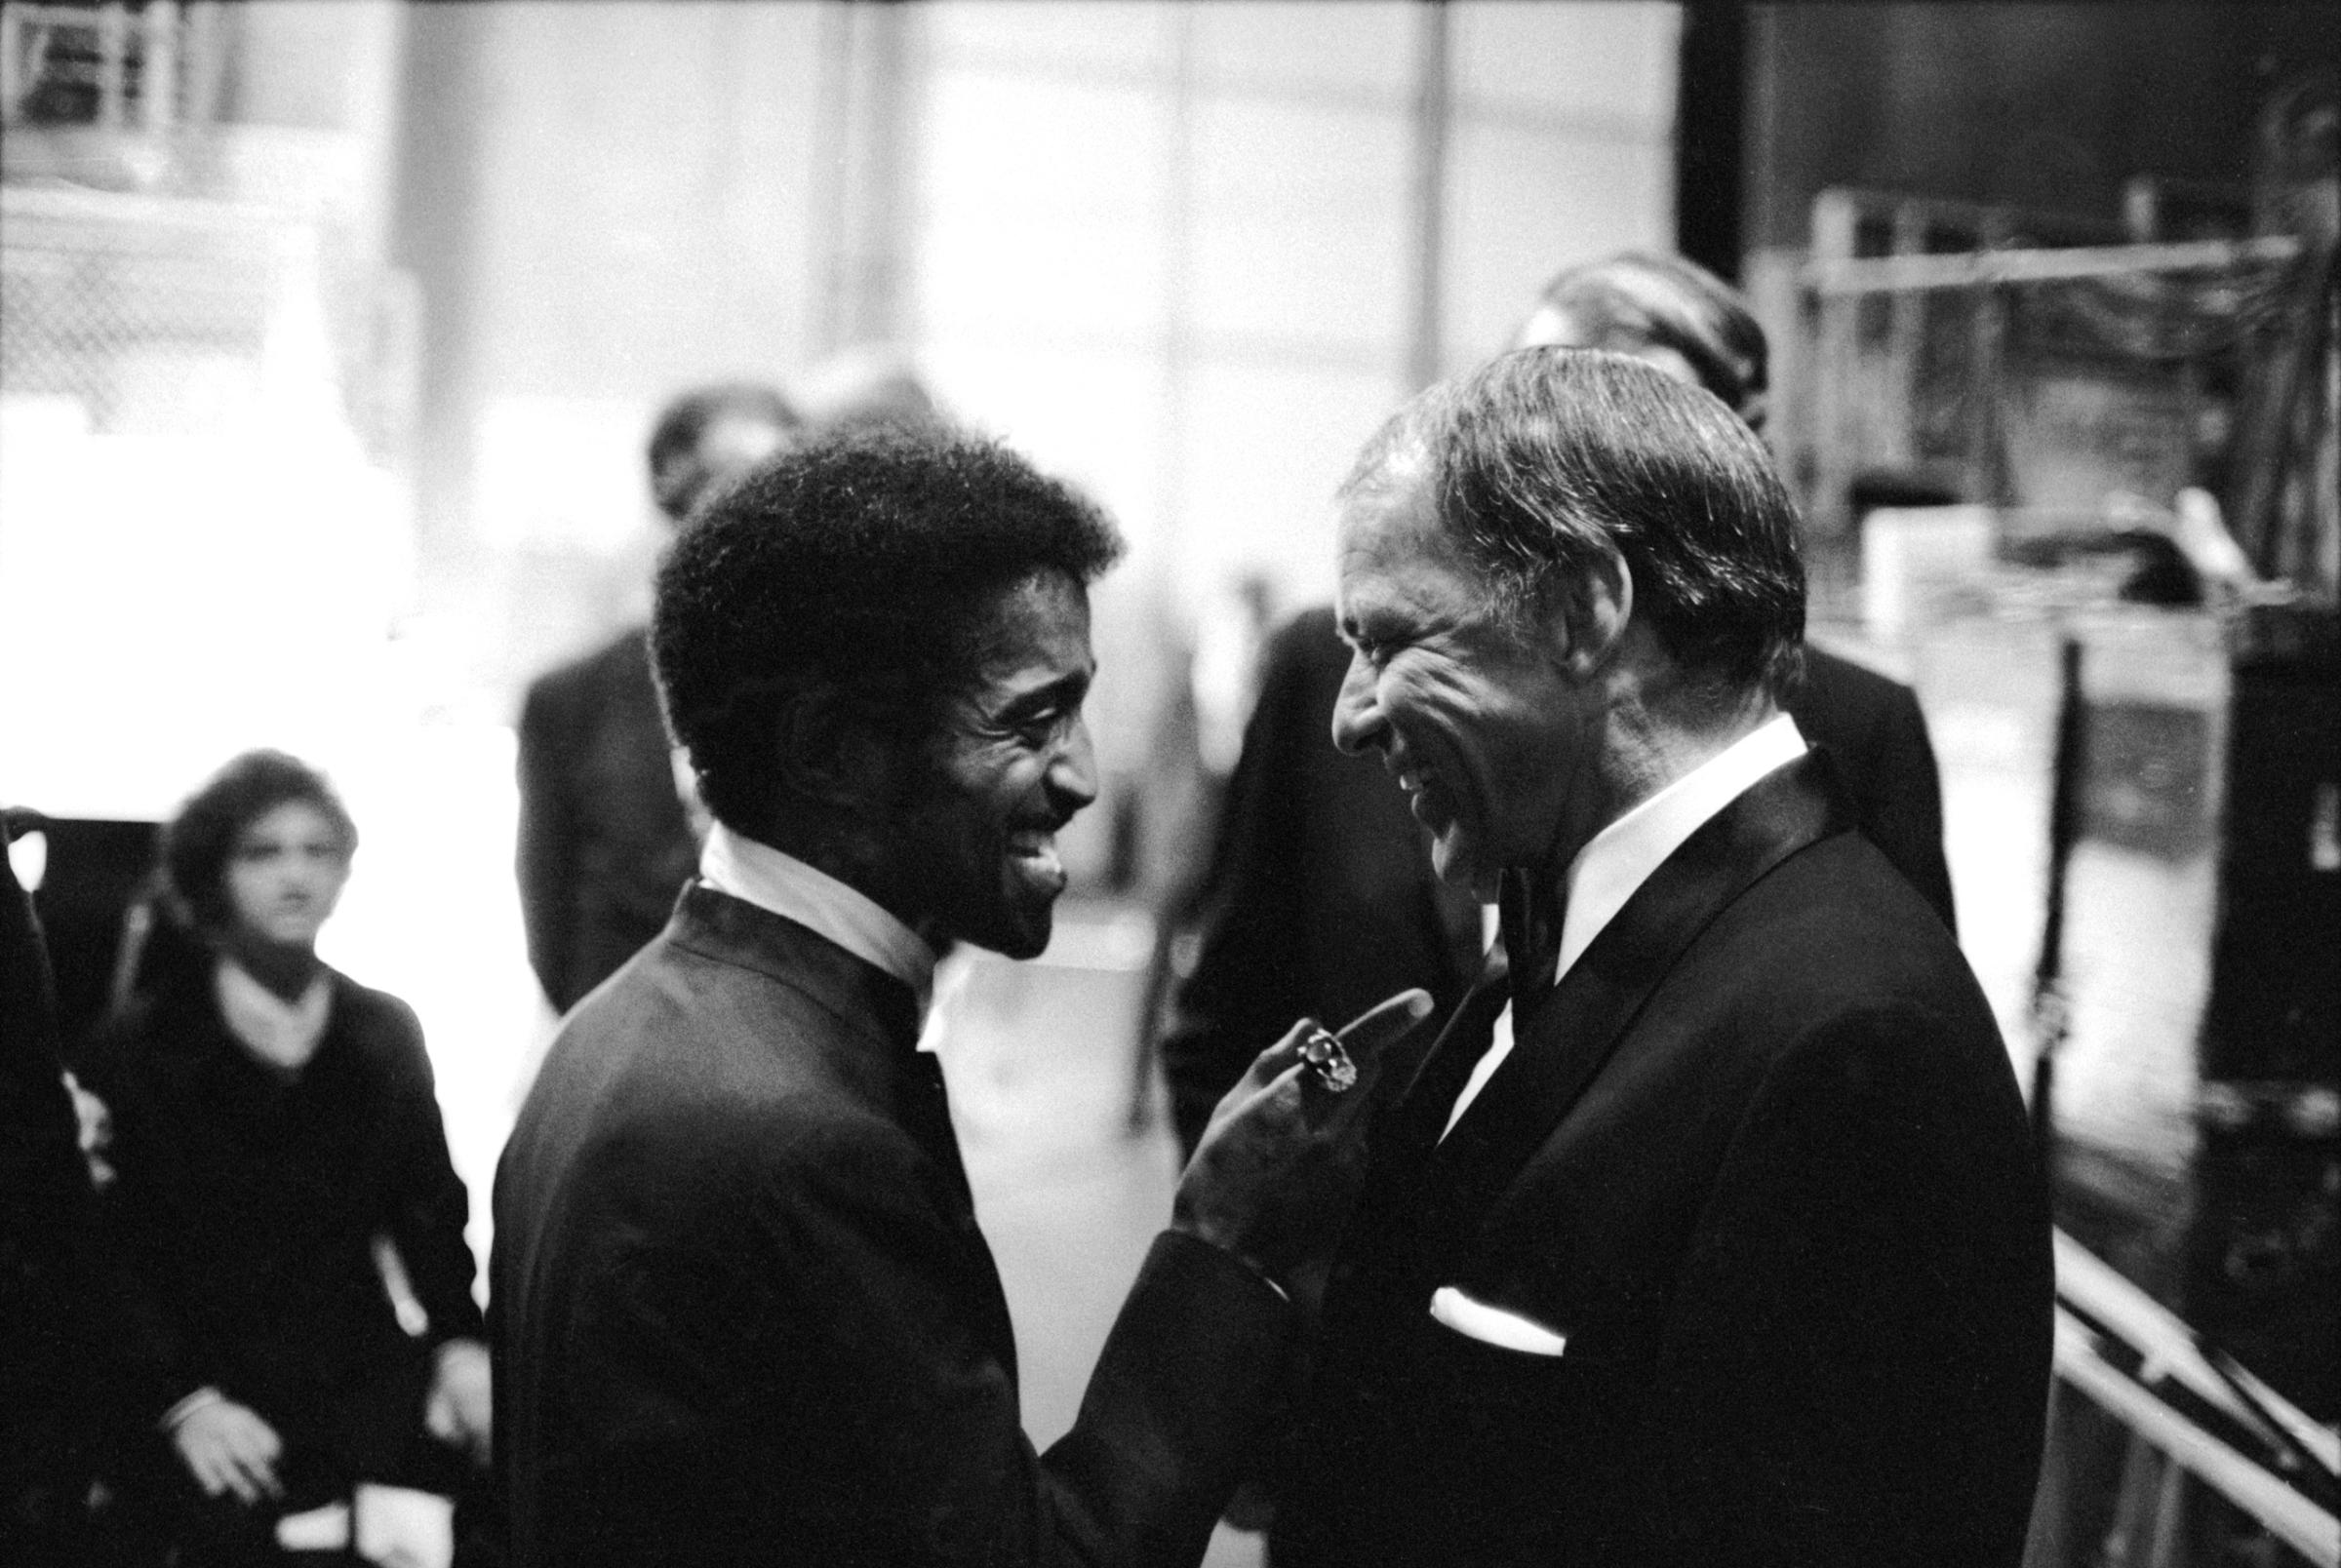 Sammy Davis Jr. talking with singer Frank Sinatra at his farewell peformance, at UCLA, 1971.